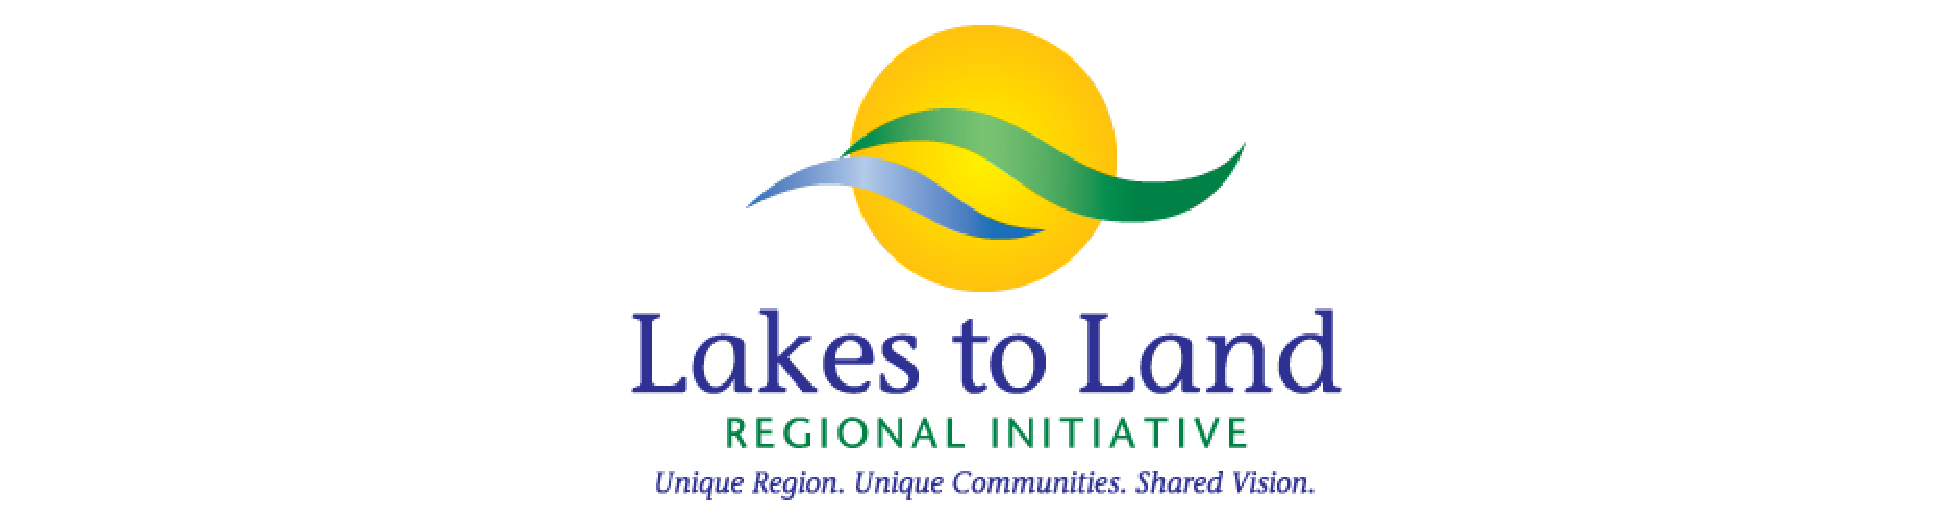 Lakes to Land Regional Initiative